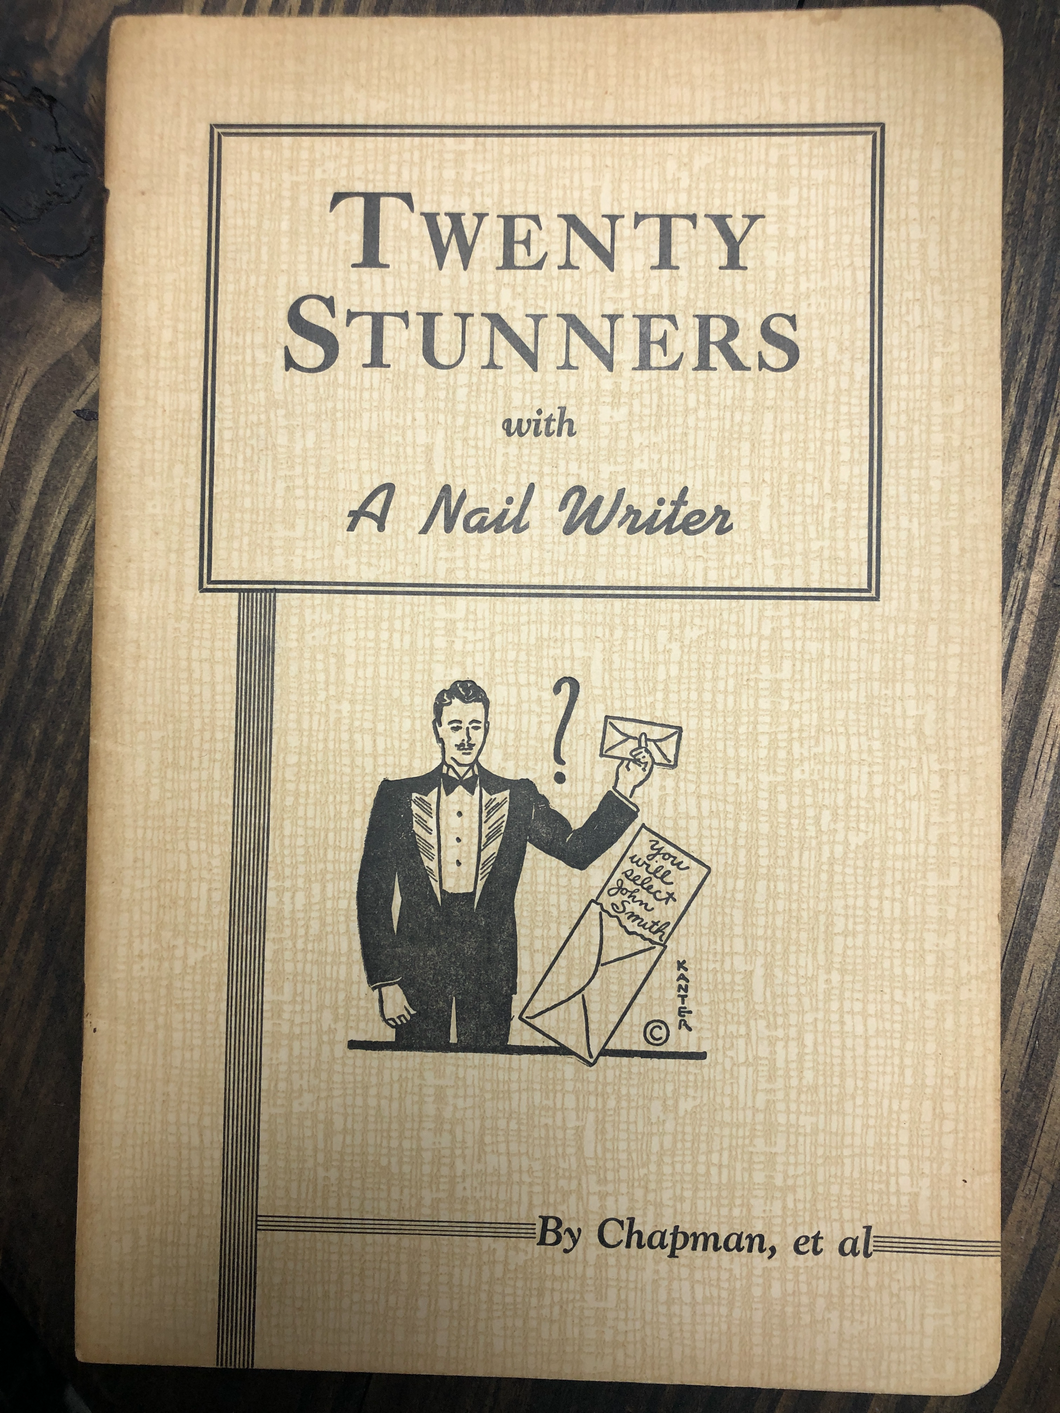 Twenty Stunners with a Nail Writer